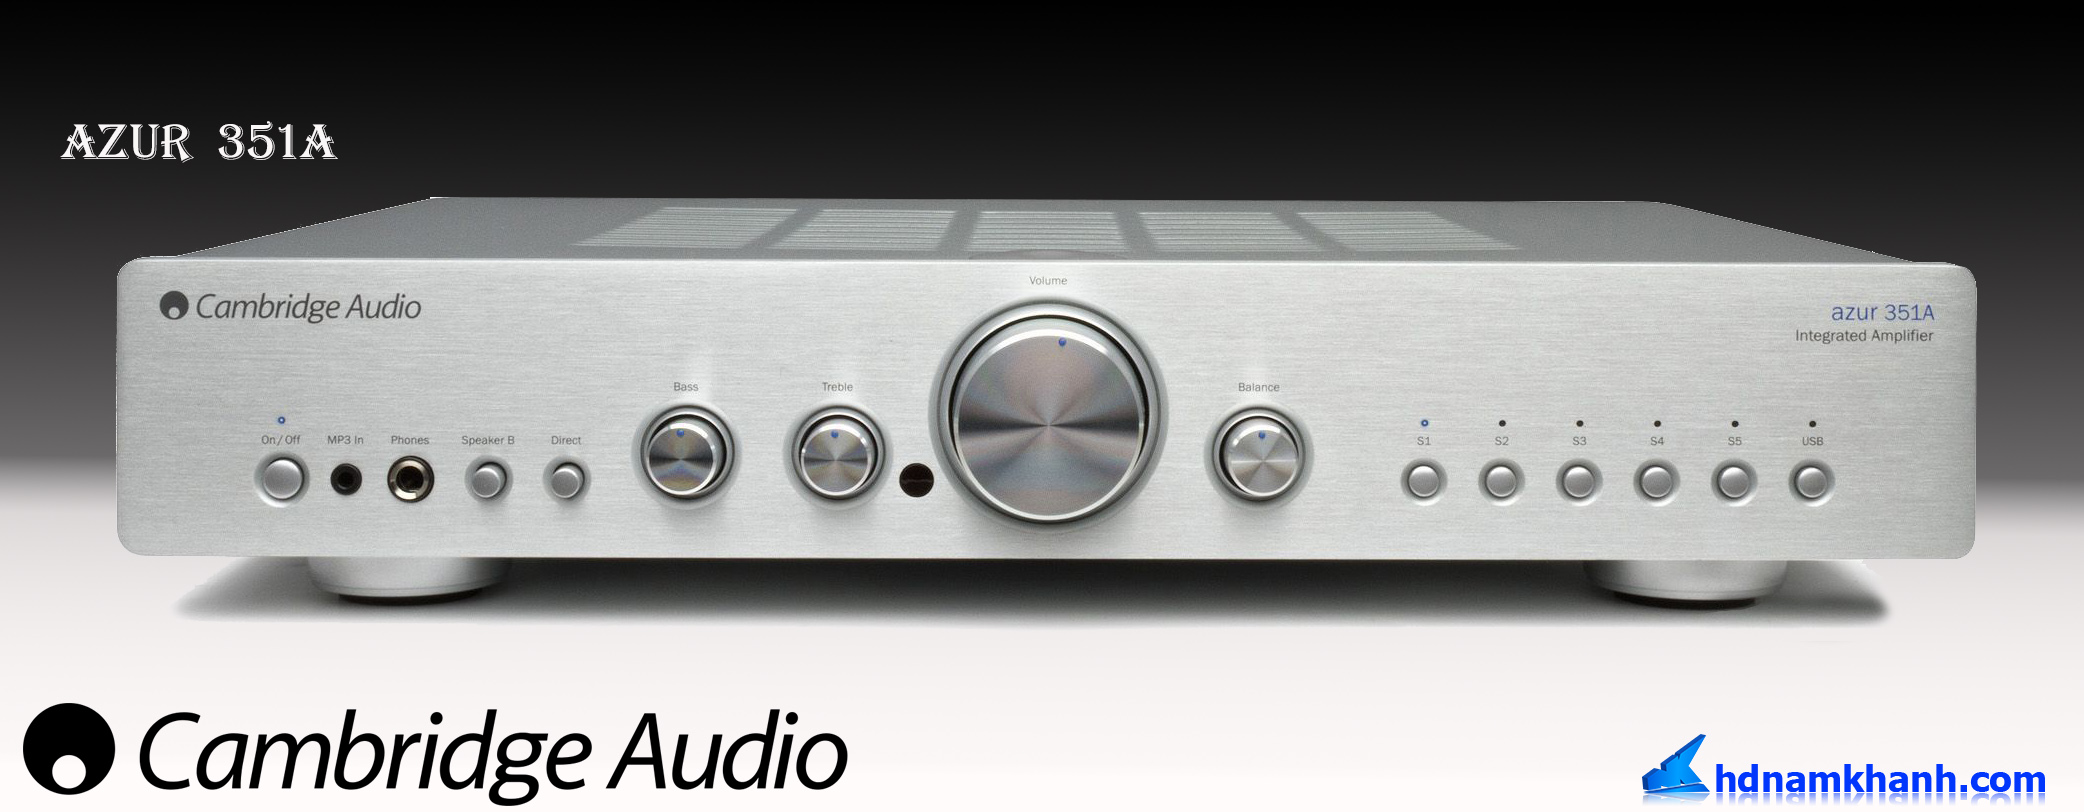 Cambridge Audio Azur 351A màu trắng bạc